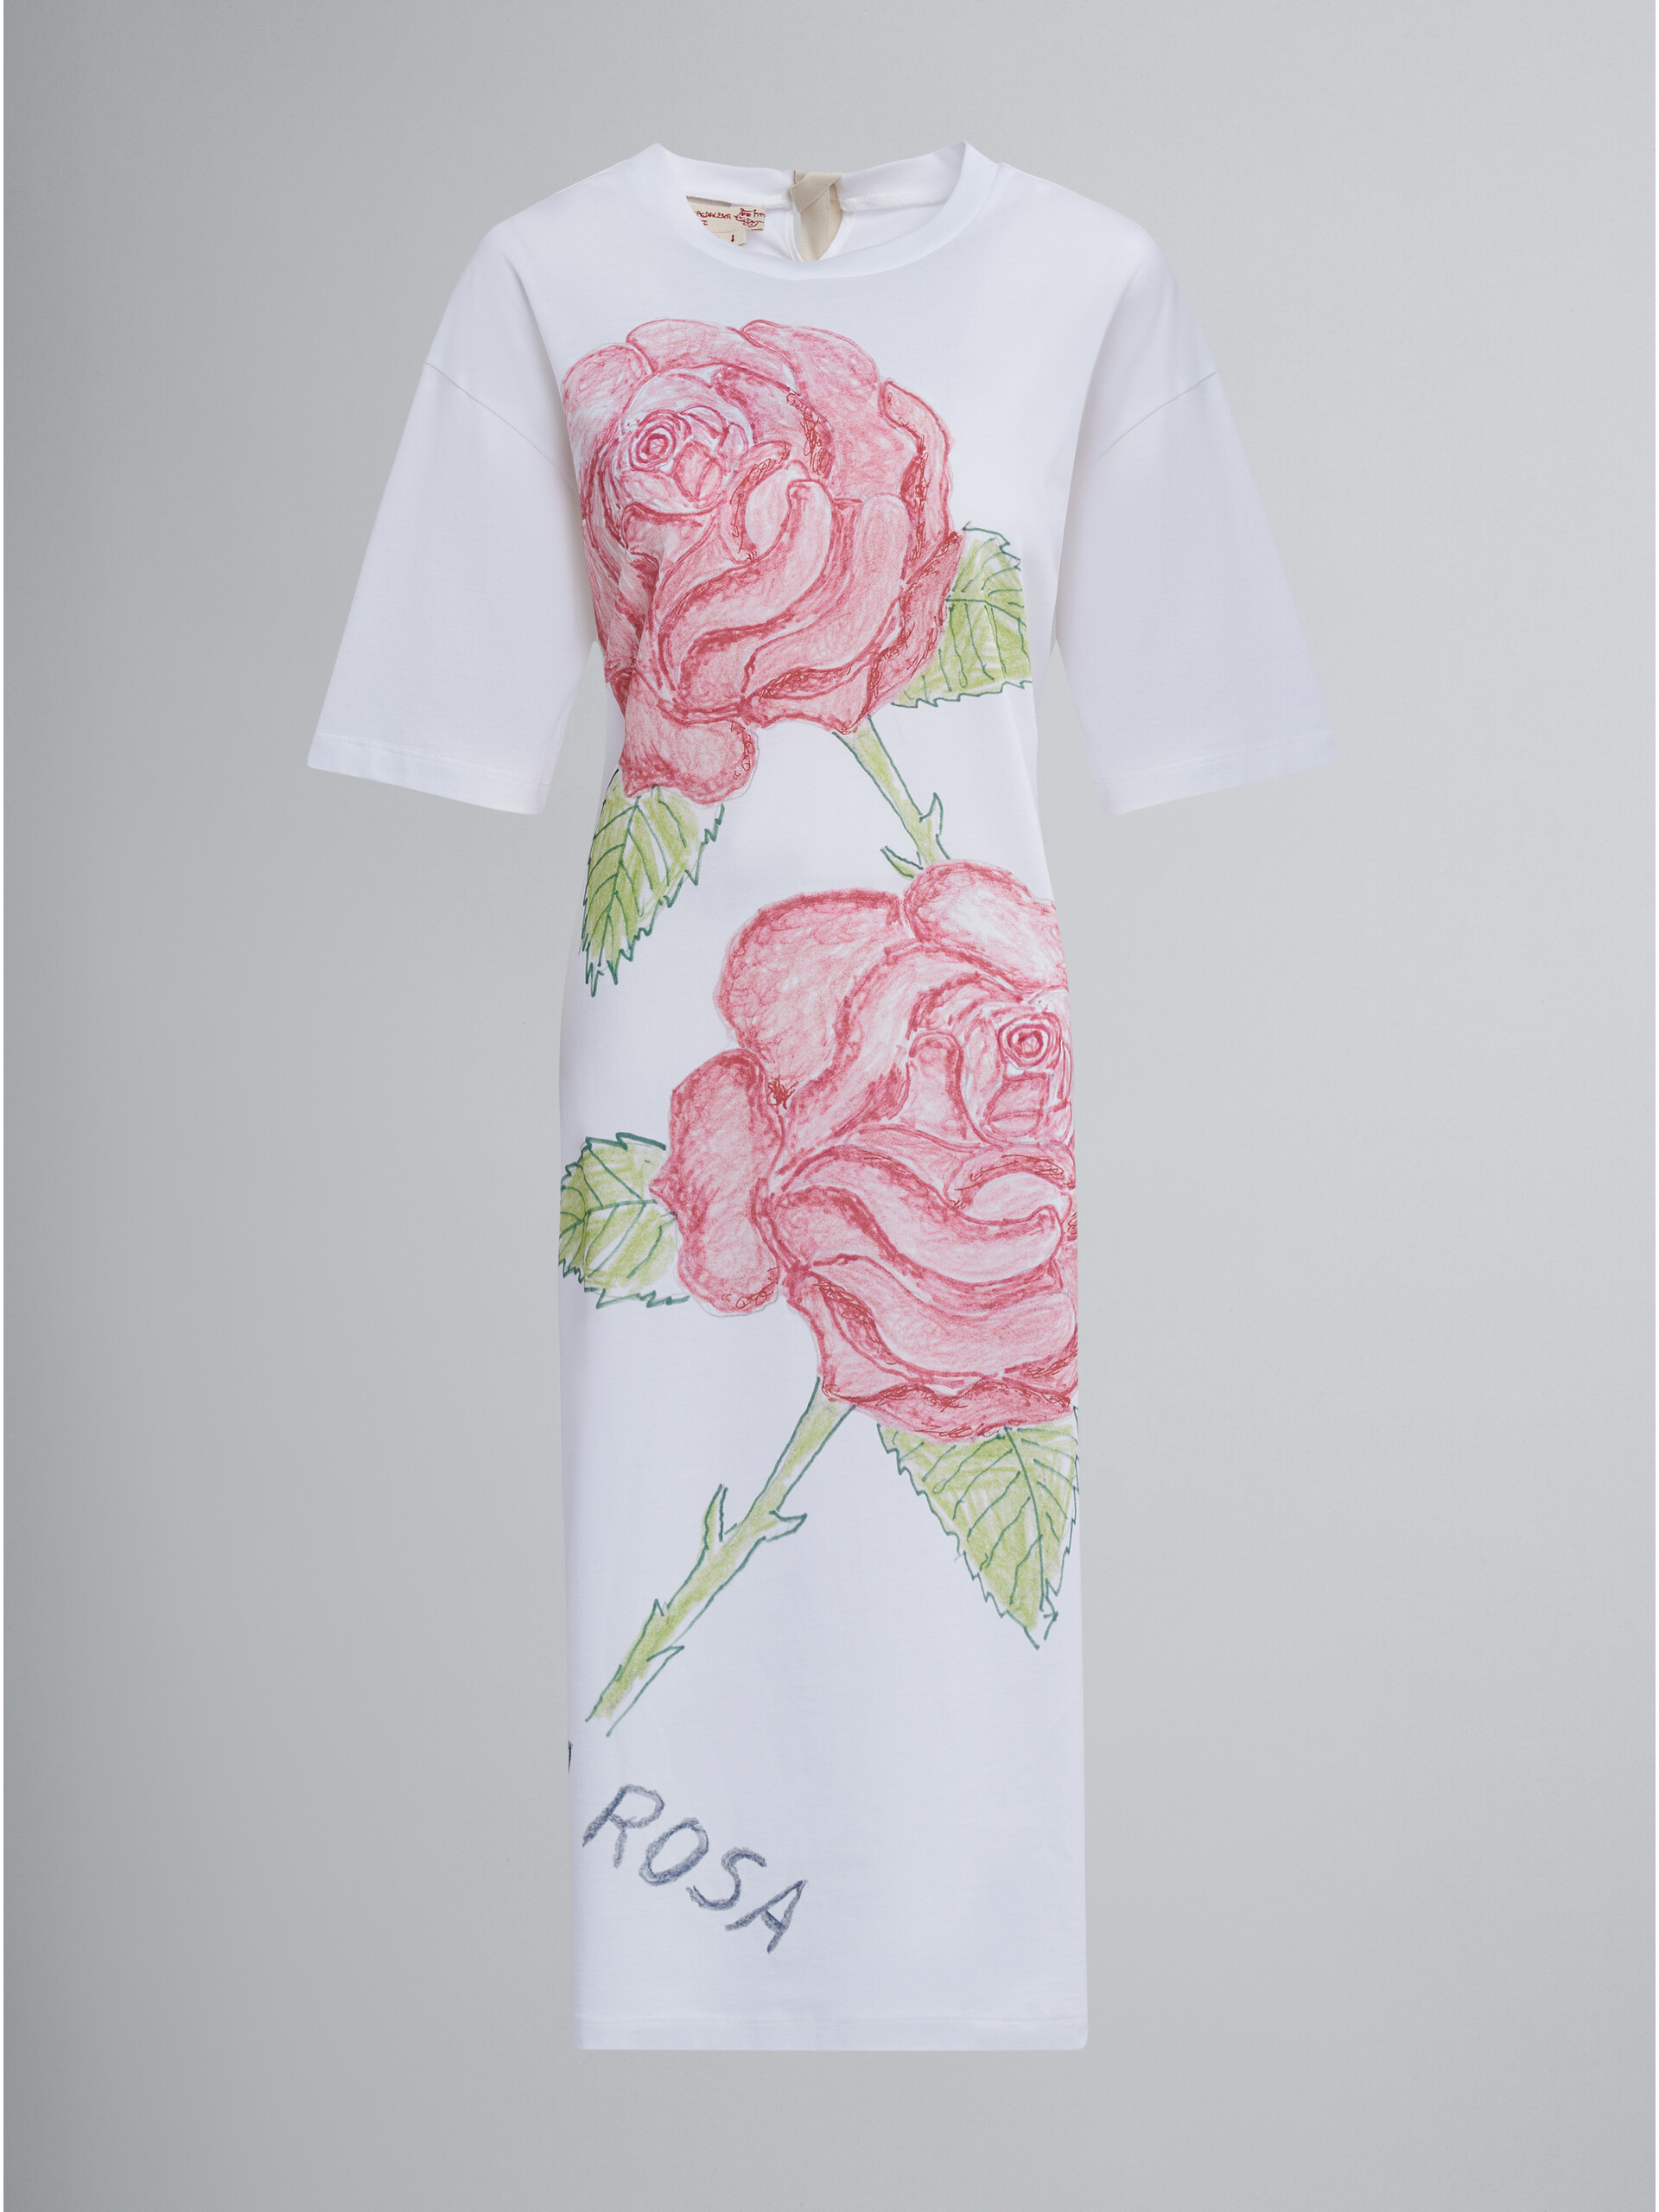 La Rosa print cotton jersey dress - Dresses - Image 1